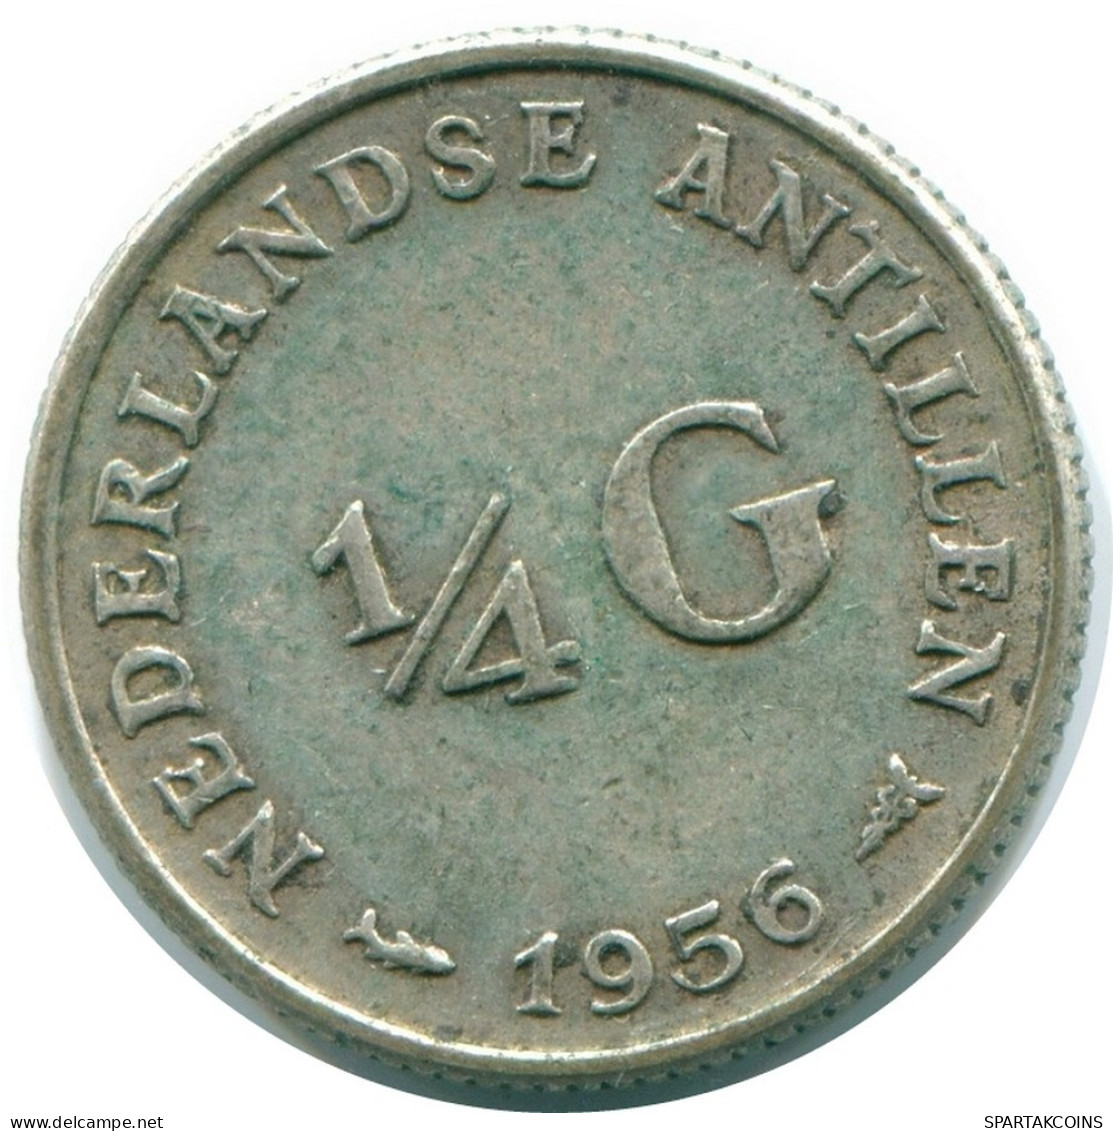 1/4 GULDEN 1956 NETHERLANDS ANTILLES SILVER Colonial Coin #NL10919.4.U.A - Niederländische Antillen